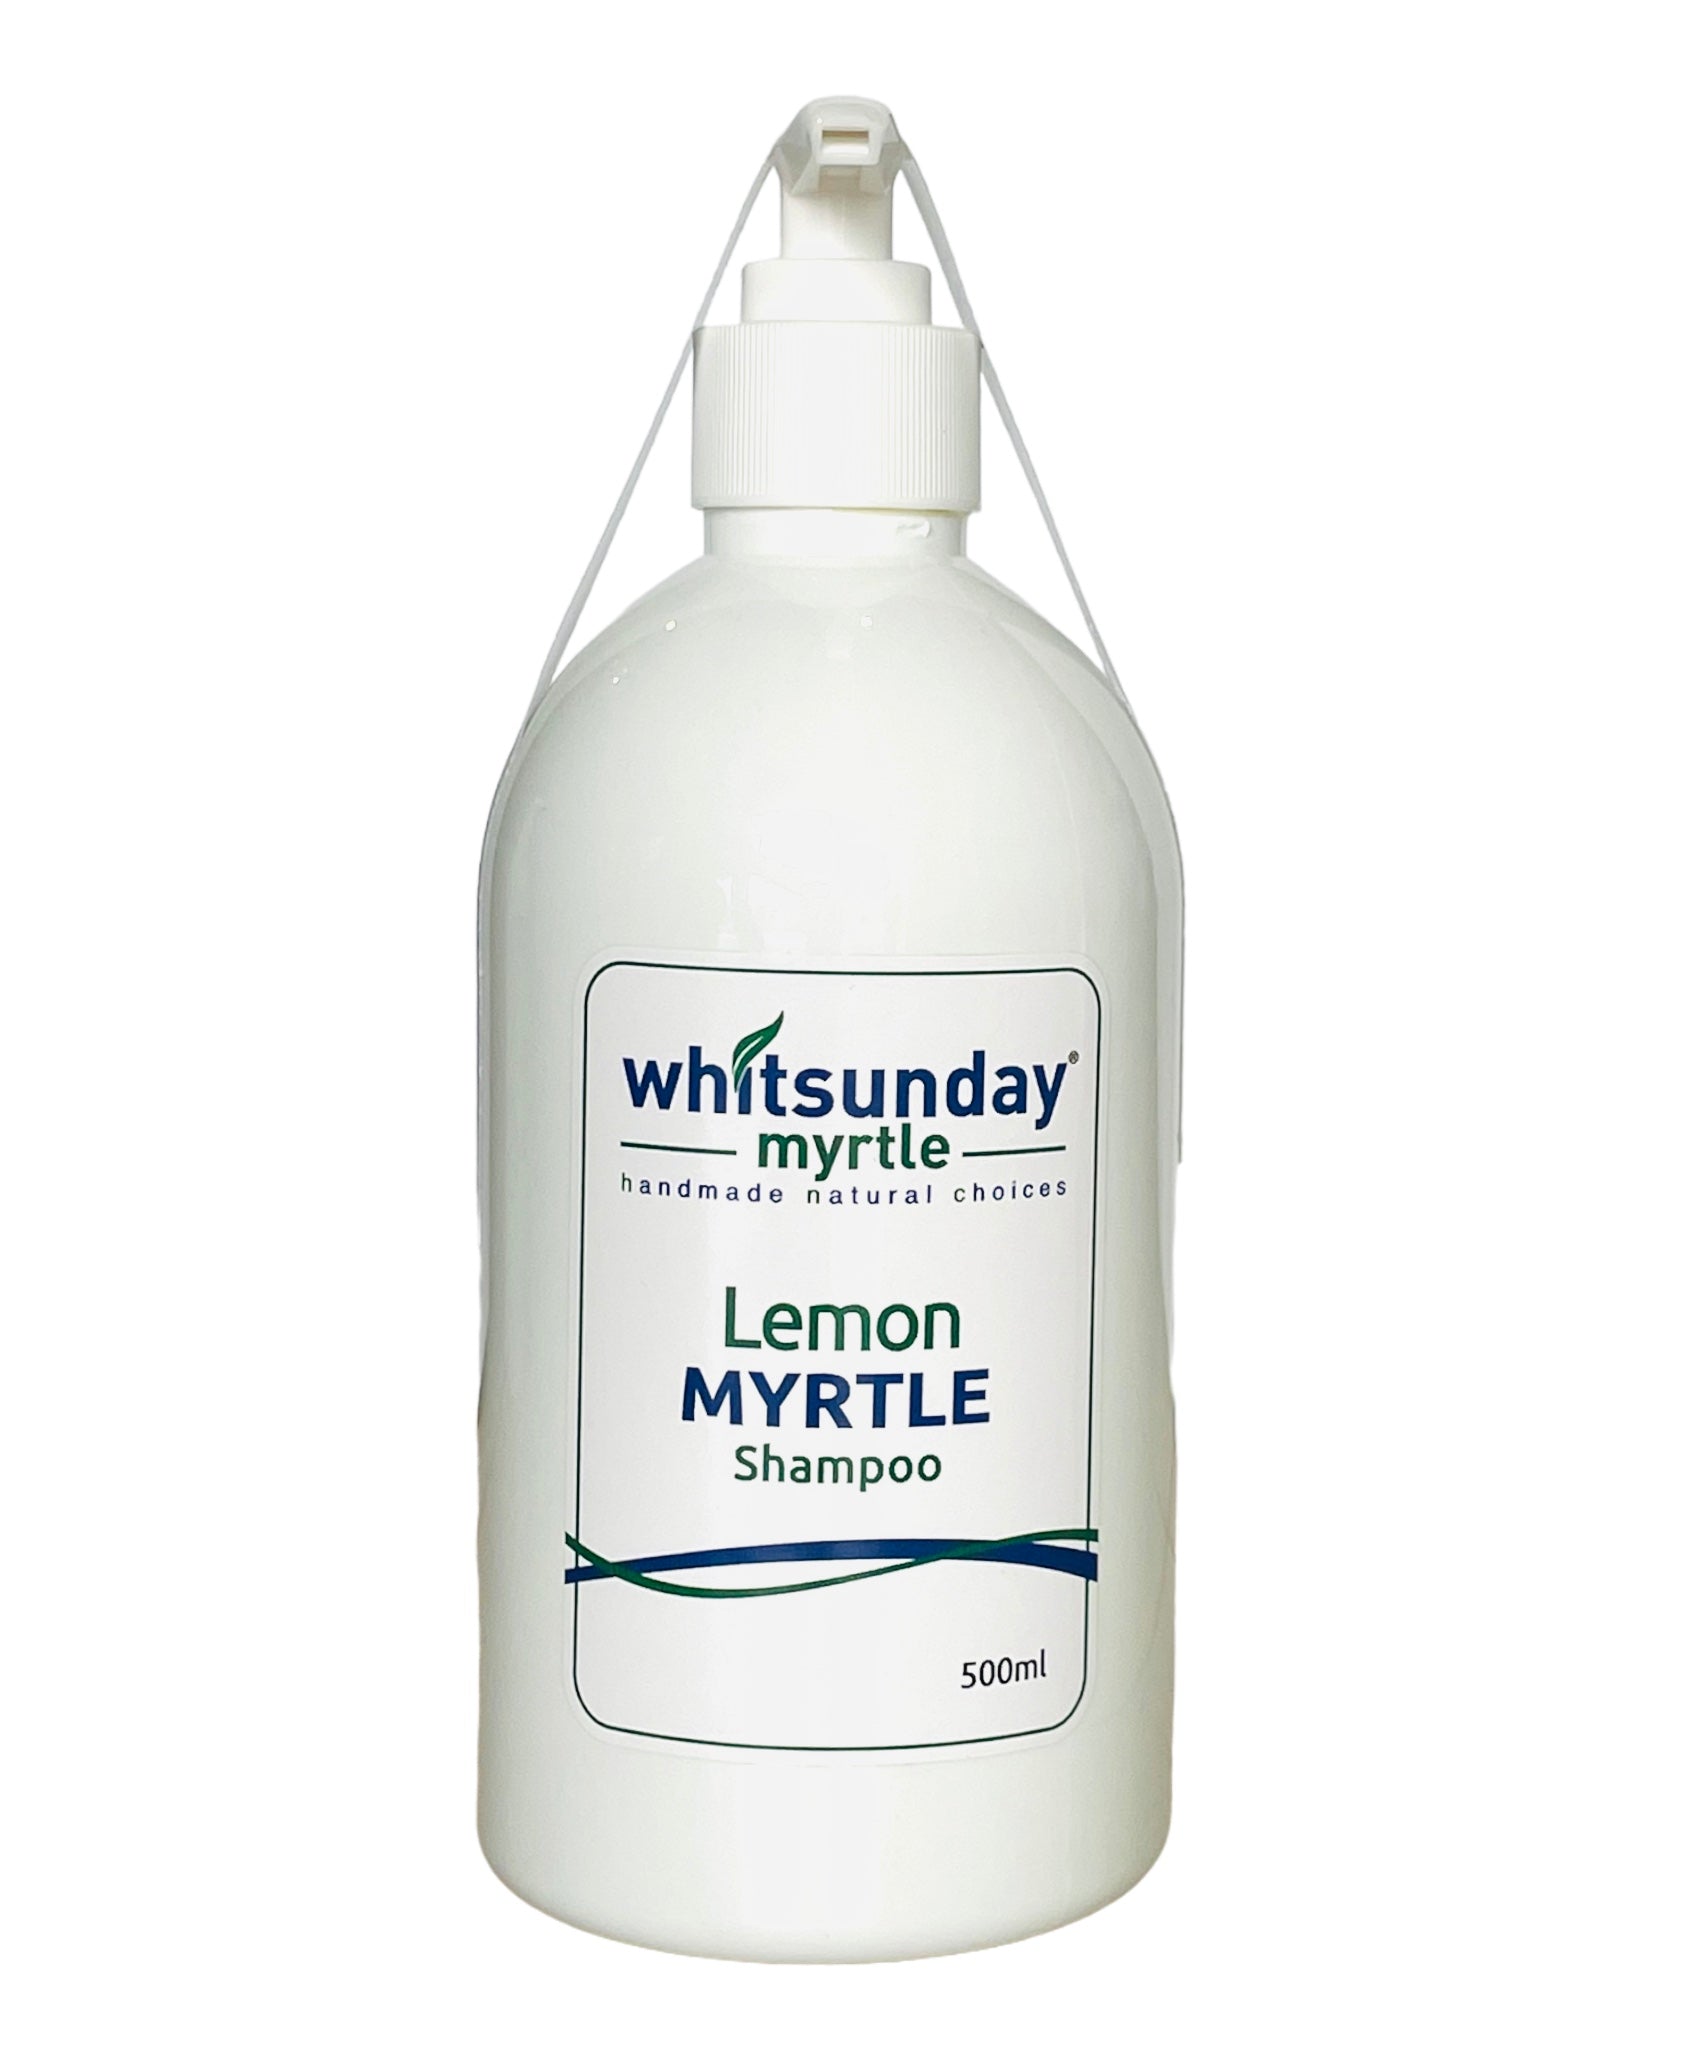 Lemon Myrtle Shampoo